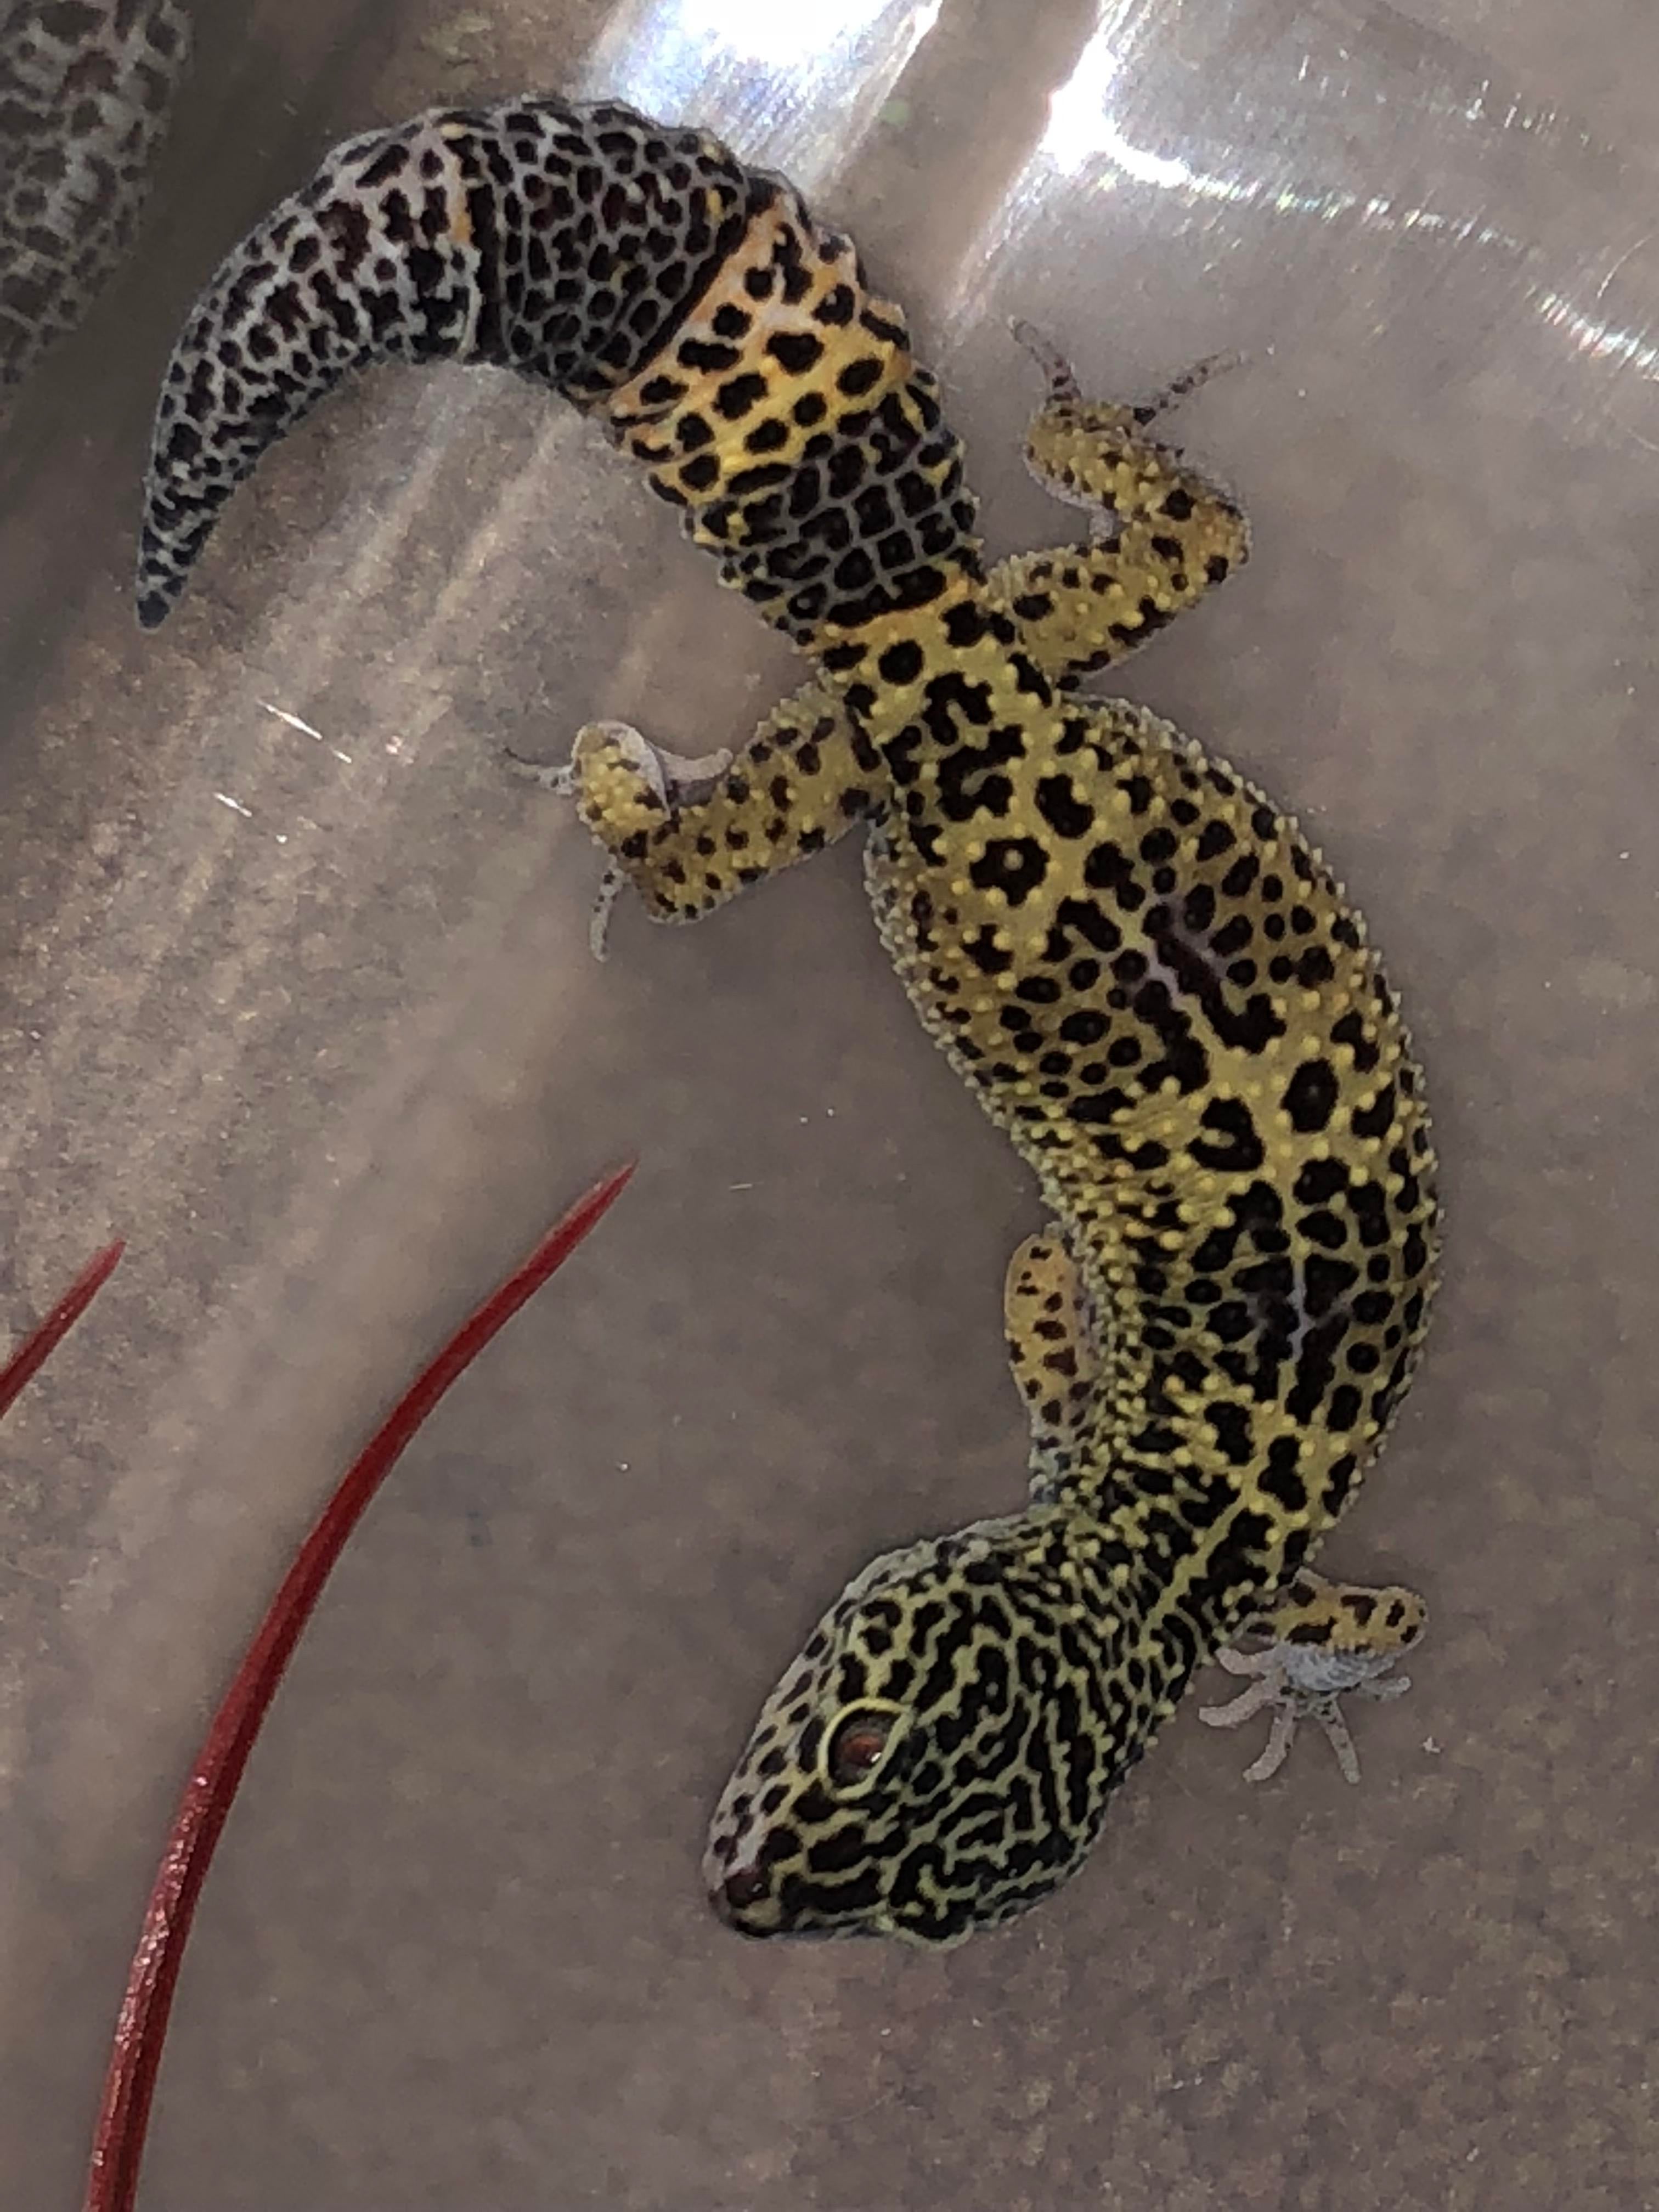 Is Reptisoil Safe for Leopard Geckos?